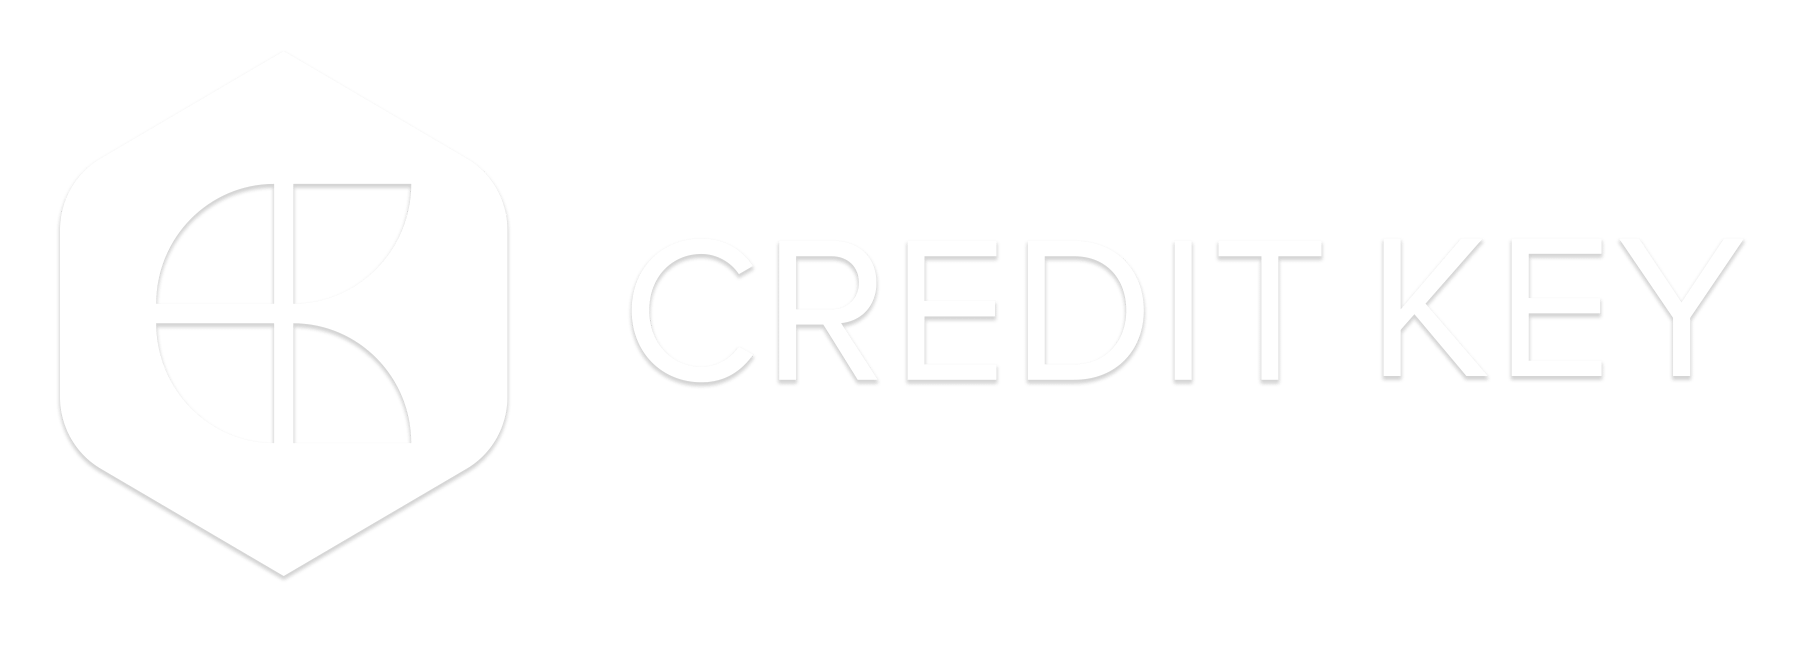 credit key white logo